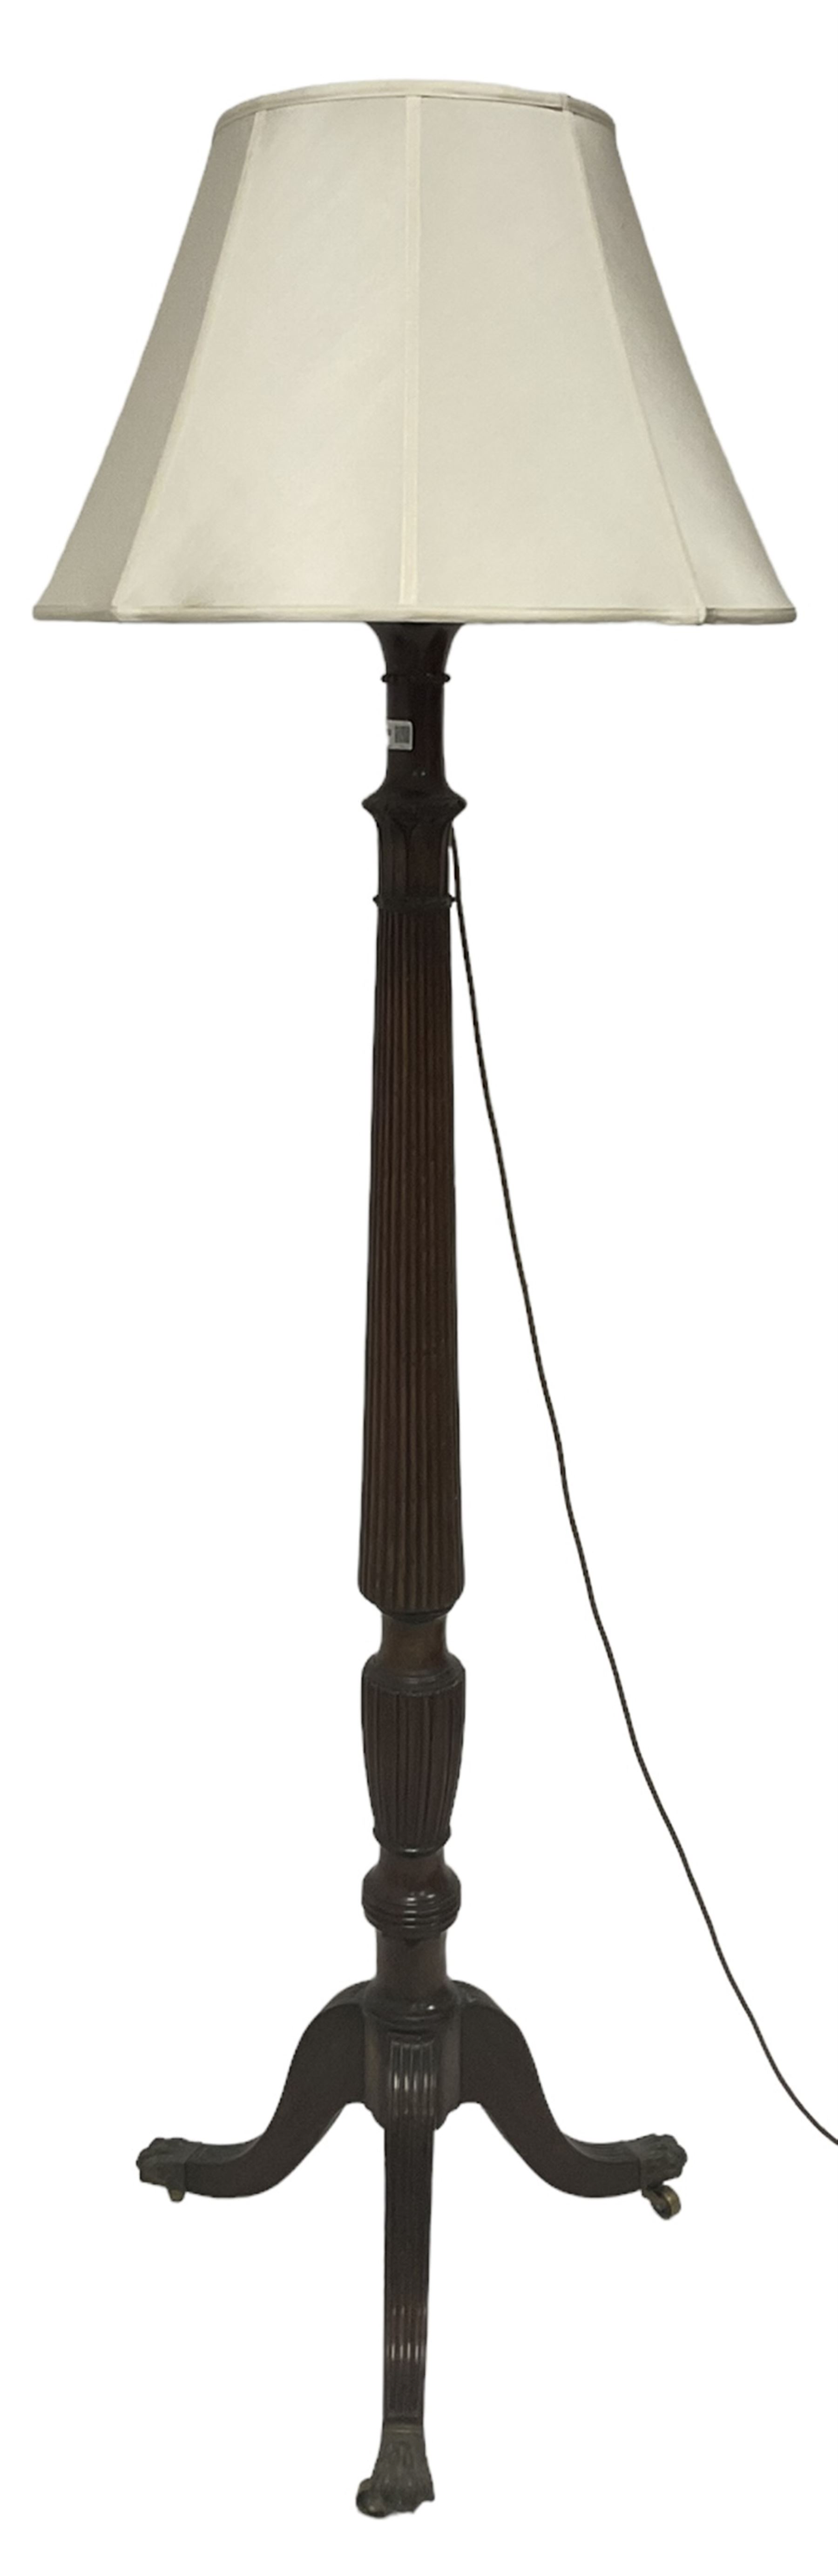 20th century standard lamp